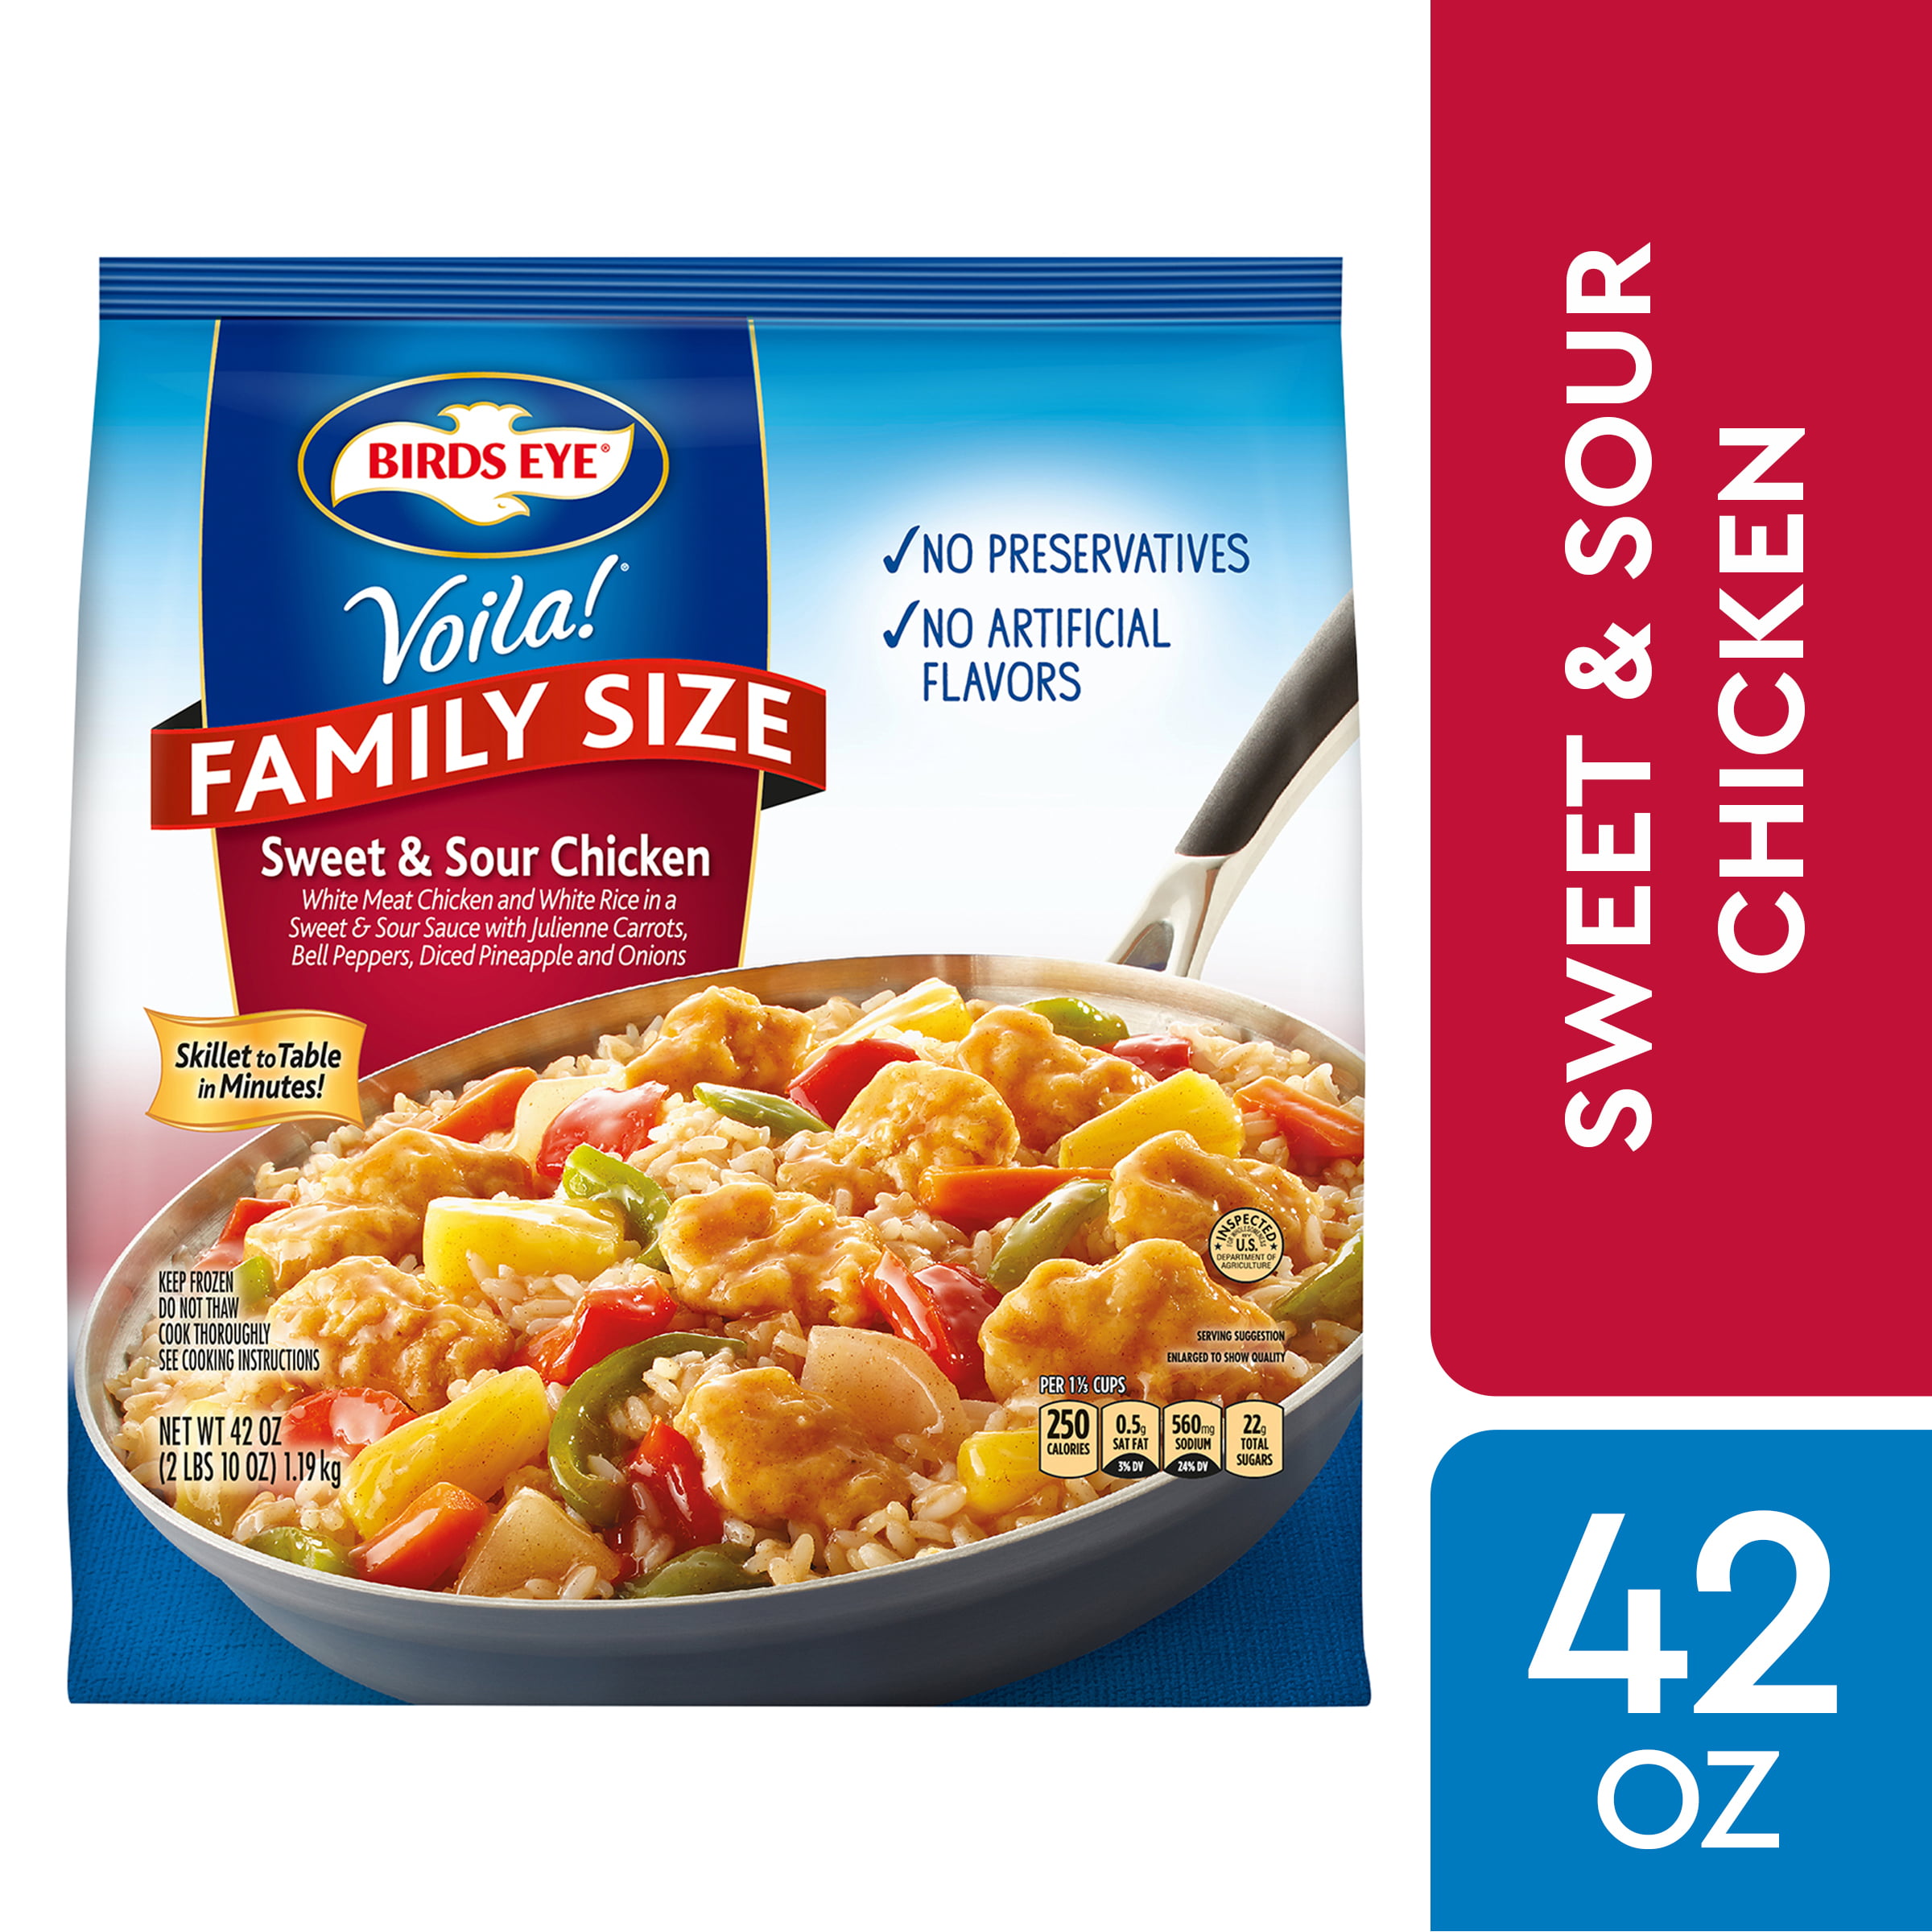 Birds Eye Voila! Sweet & Sour Chicken Family Size Skillet Frozen Meal, 42 oz (Frozen)